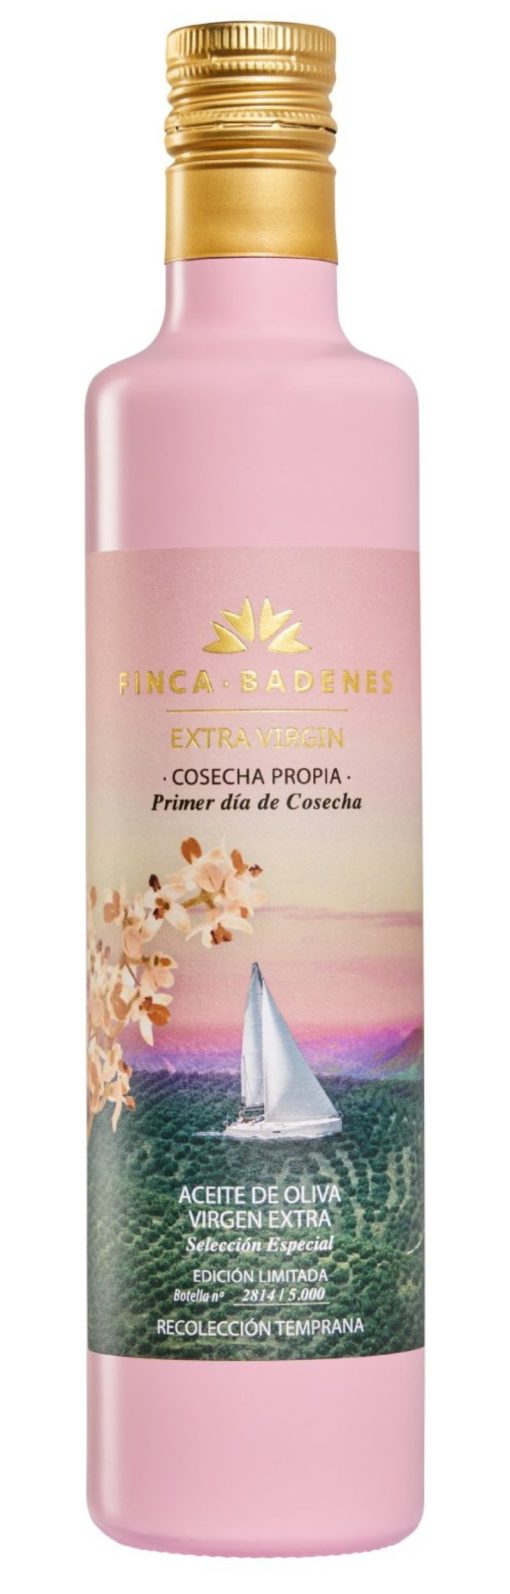 Aceite de Oliva Virgen Extra coupage tres variedades Finca Badenes Aires de Jaen 500 ml x 4 un ST 02 1675174811